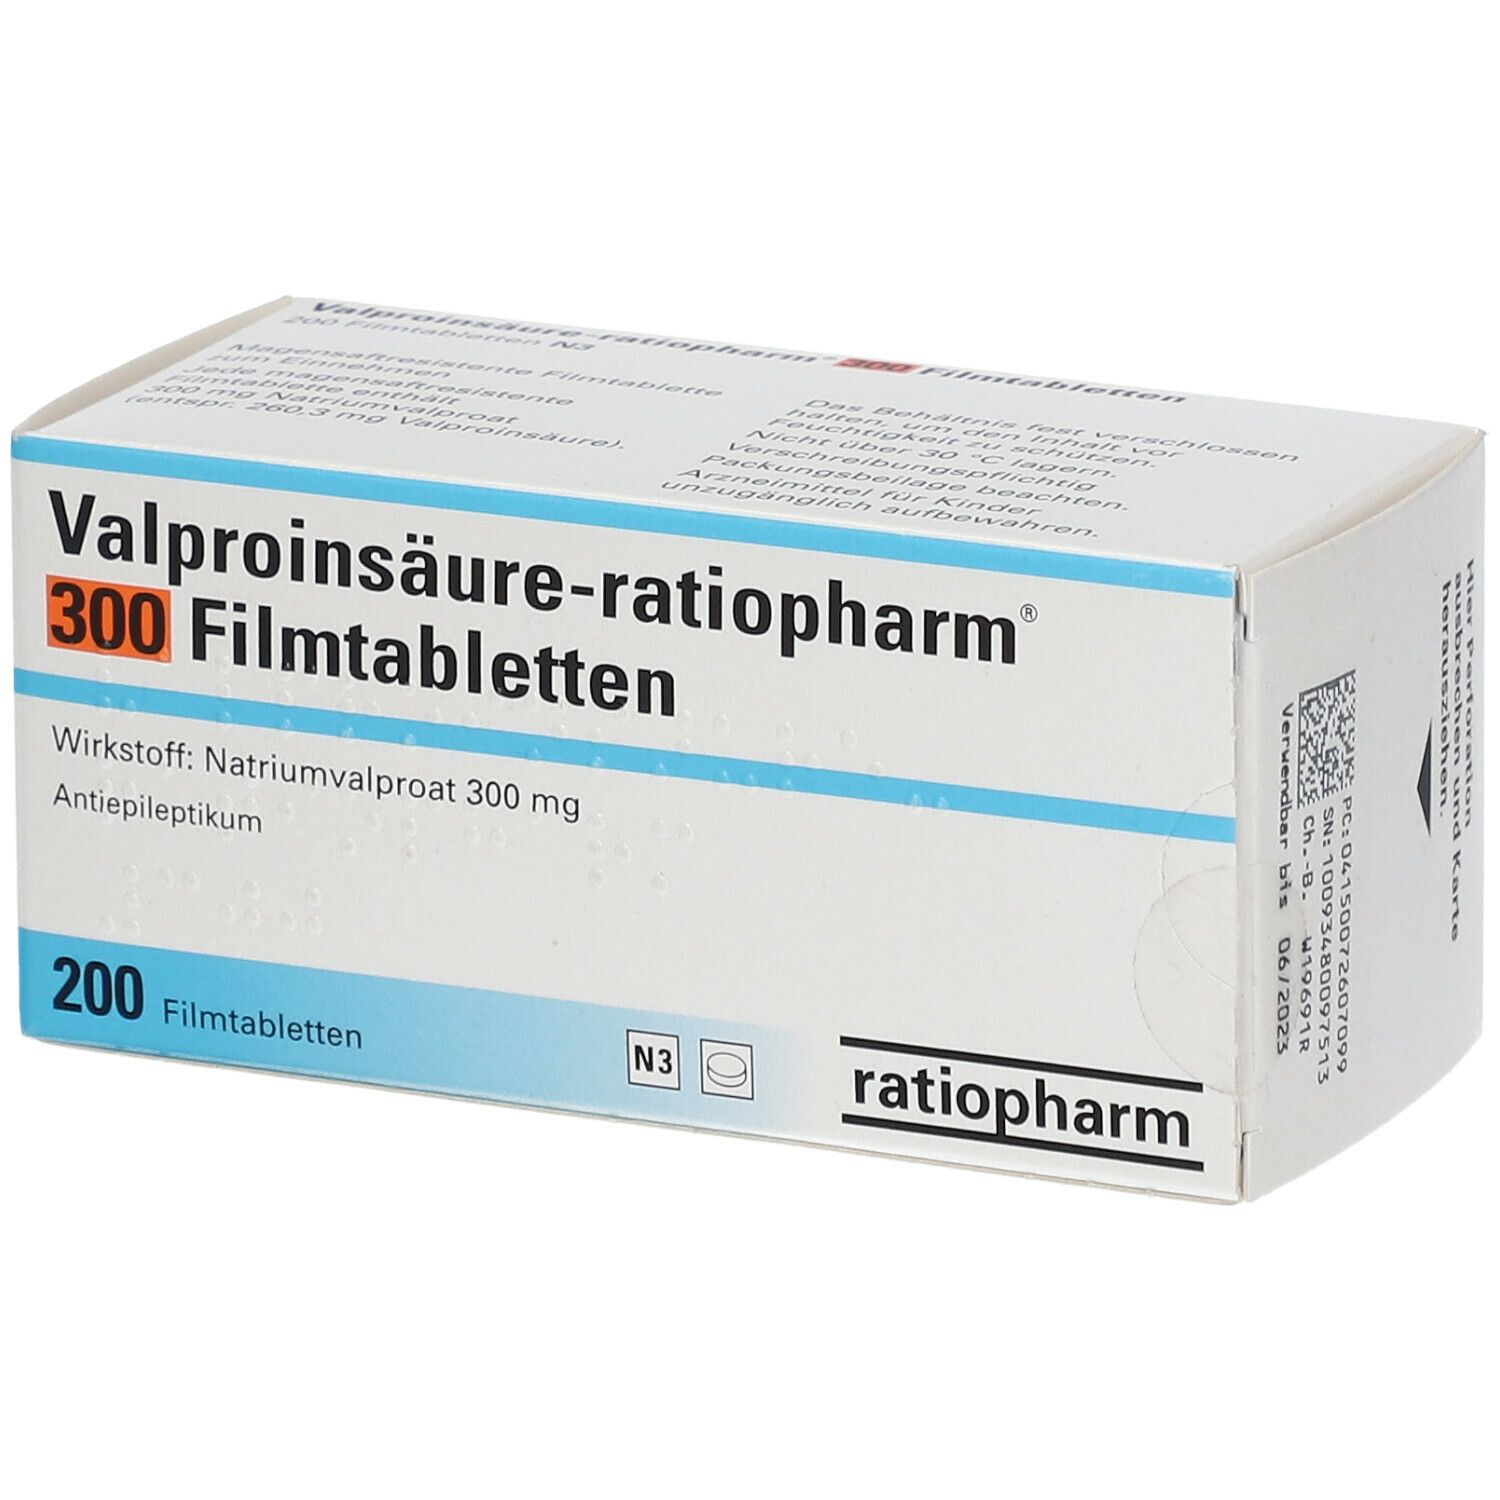 Valproinsäure-ratiopharm® 300